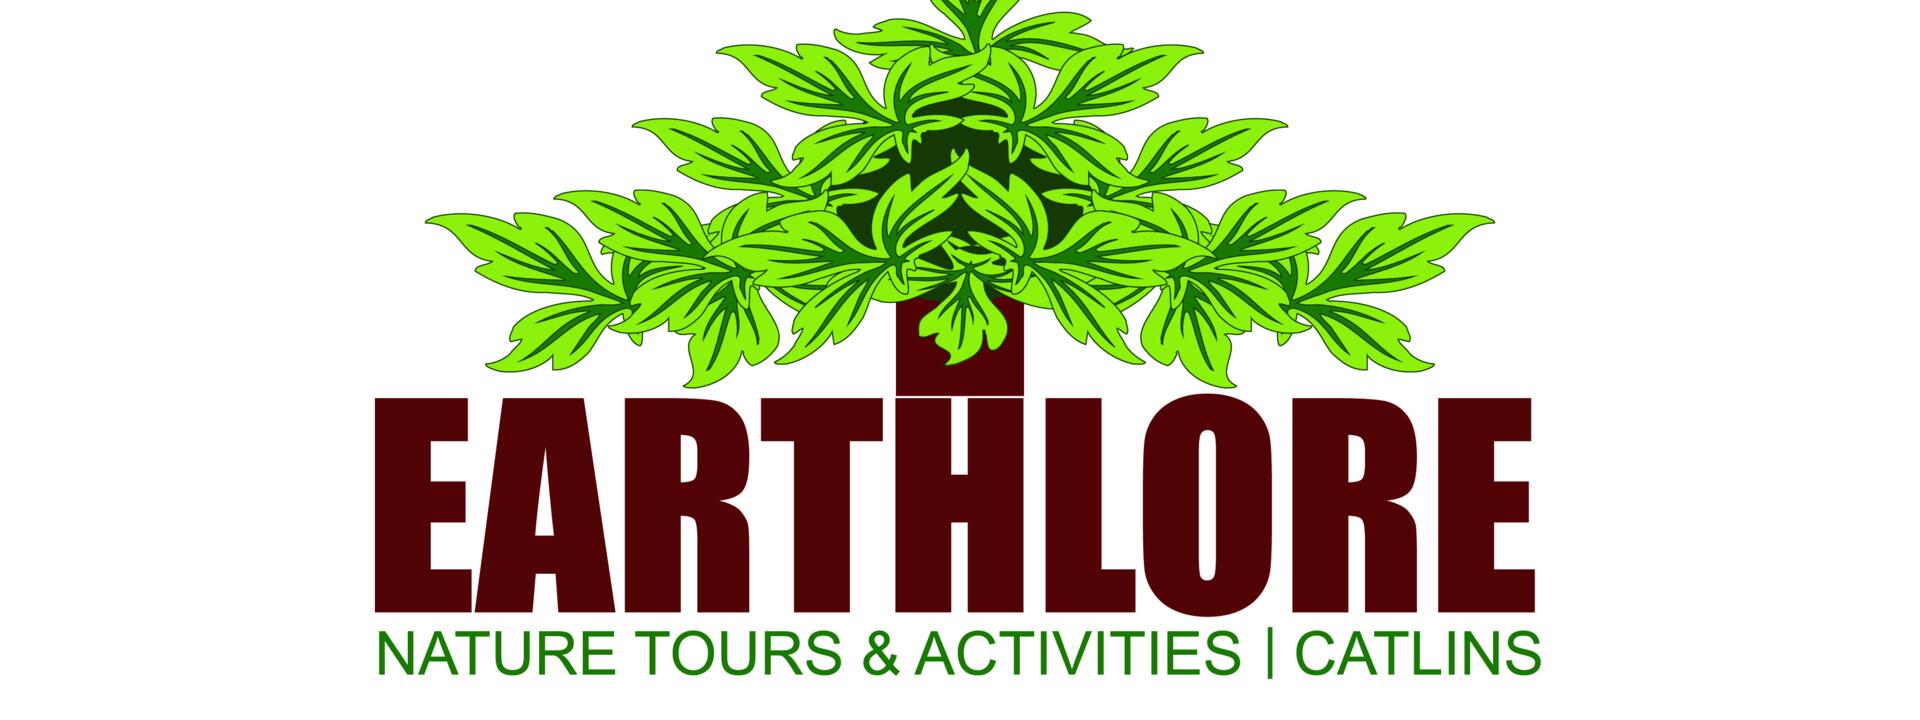 earthlore-logo-tomahawk.jpg